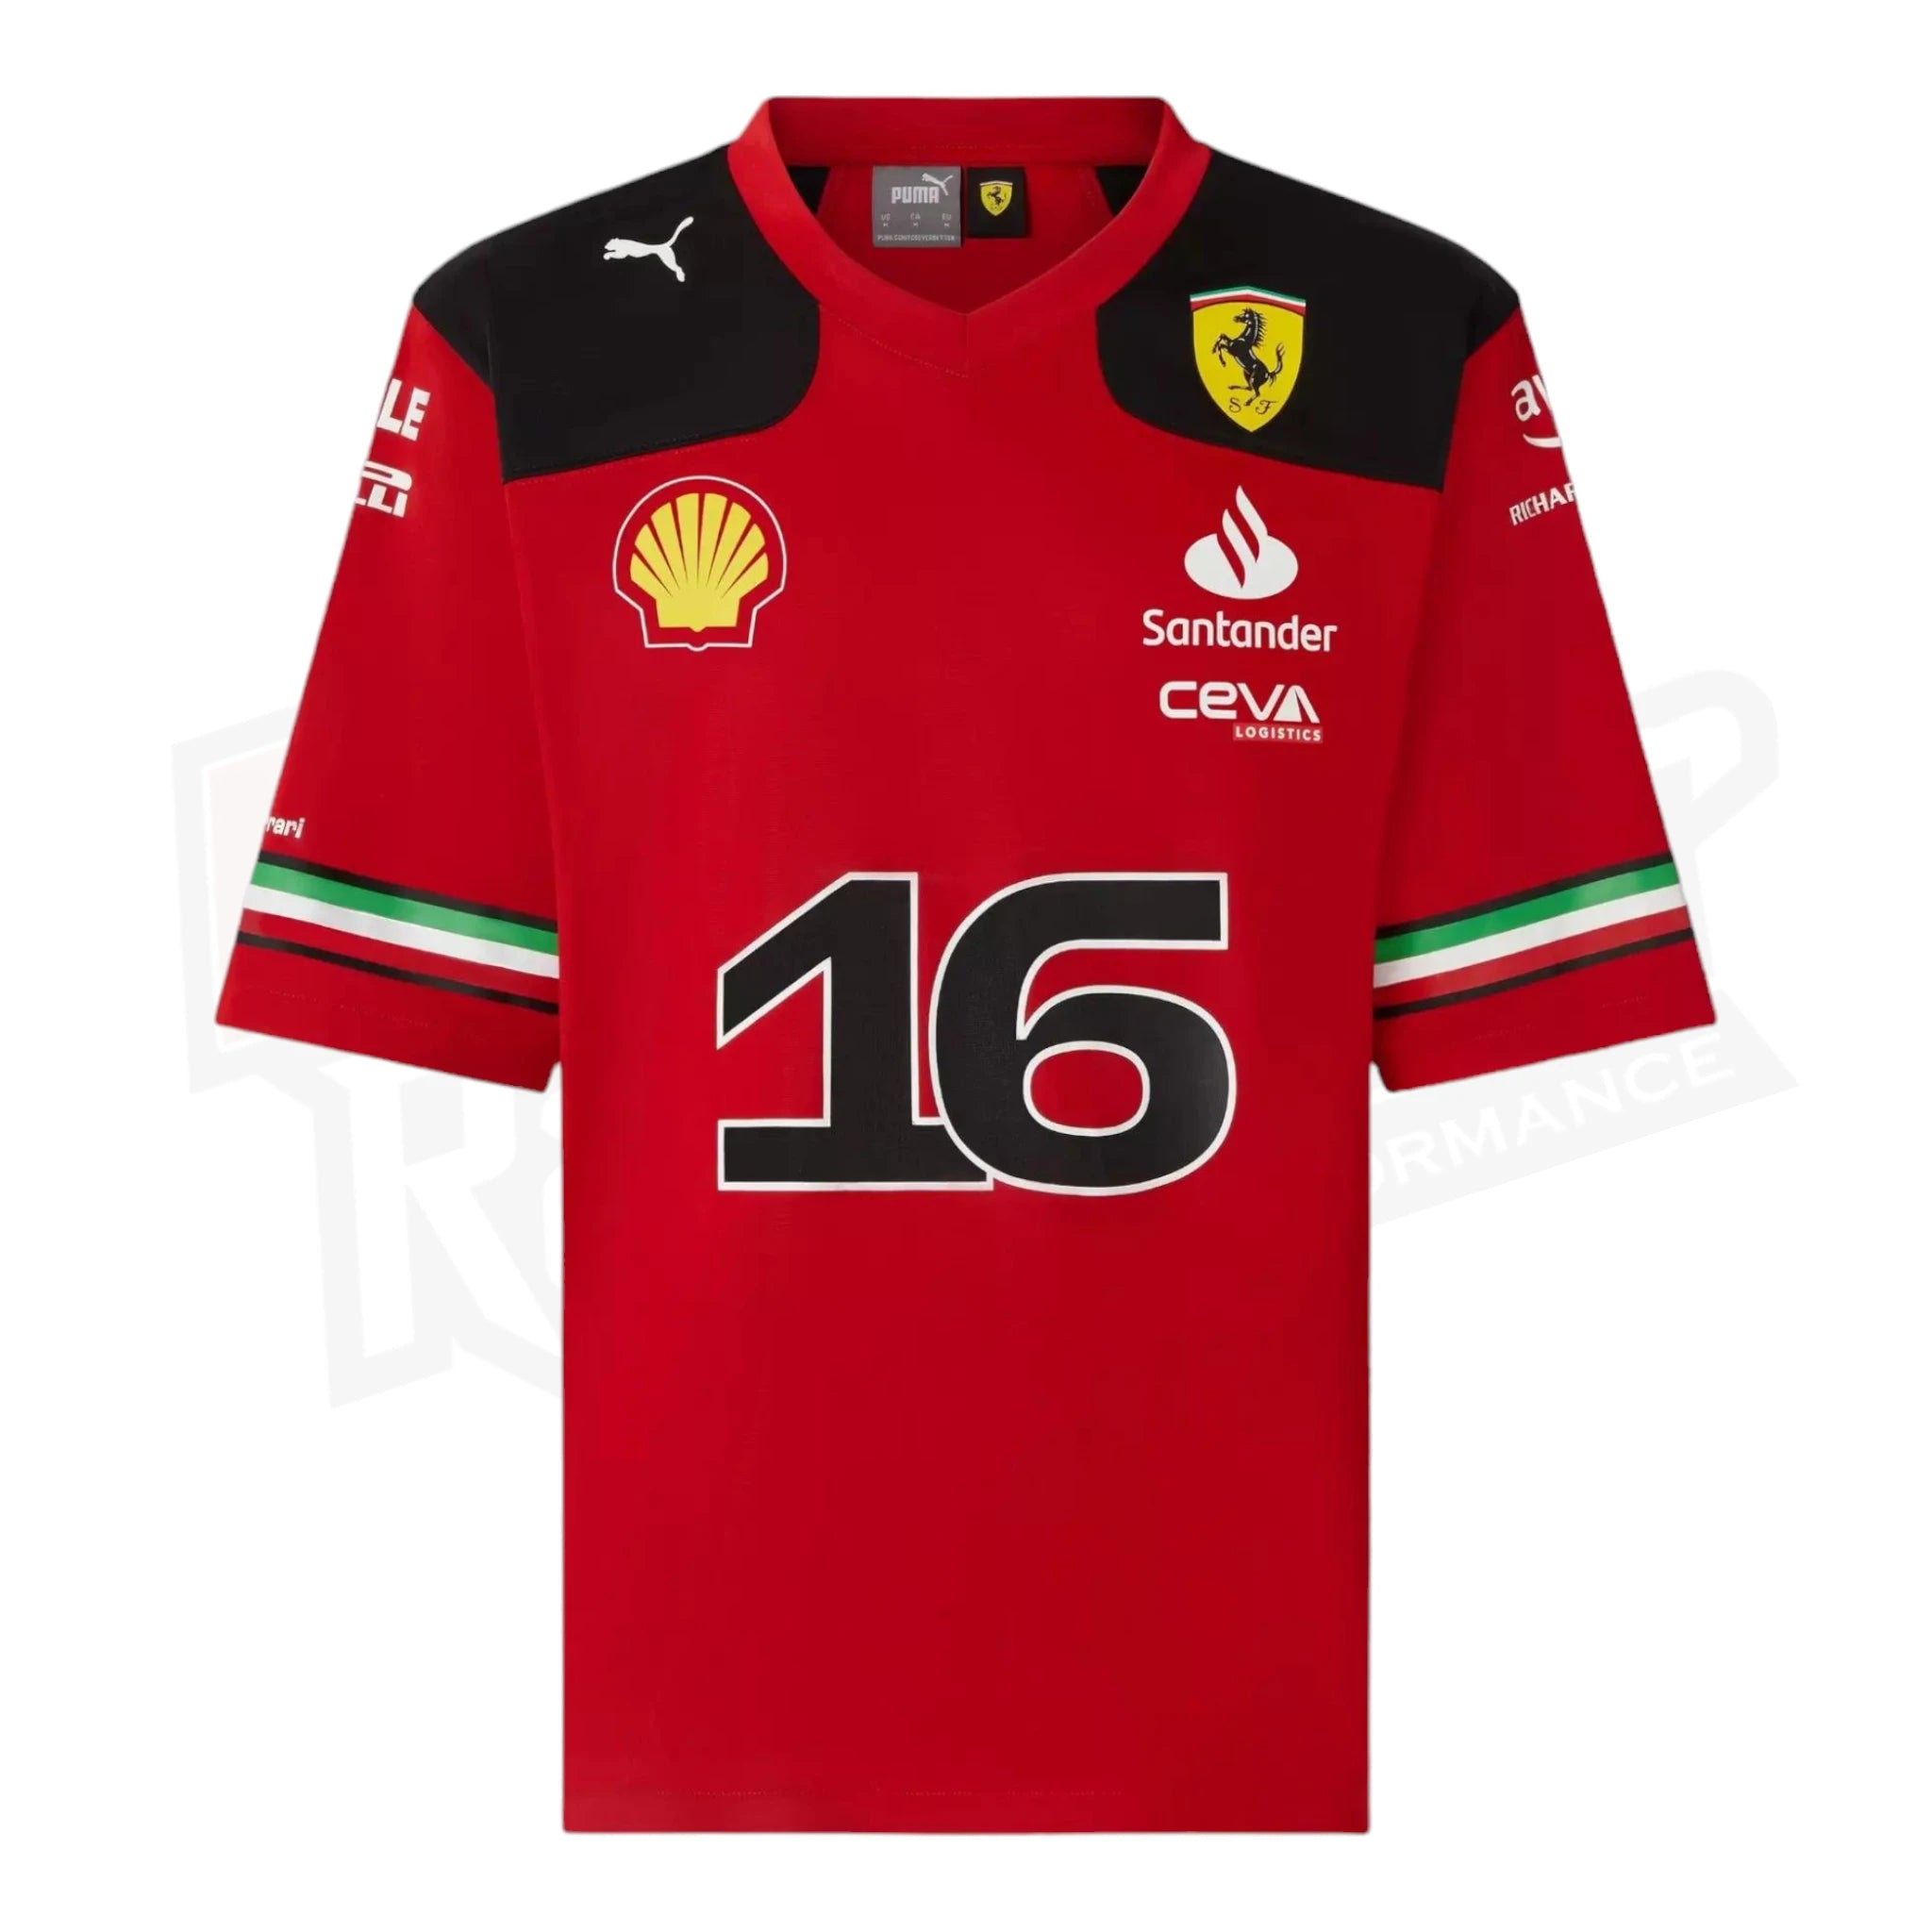 Scuderia Ferrari Replica Charles Leclerc American football jersey - Austin Special Edition